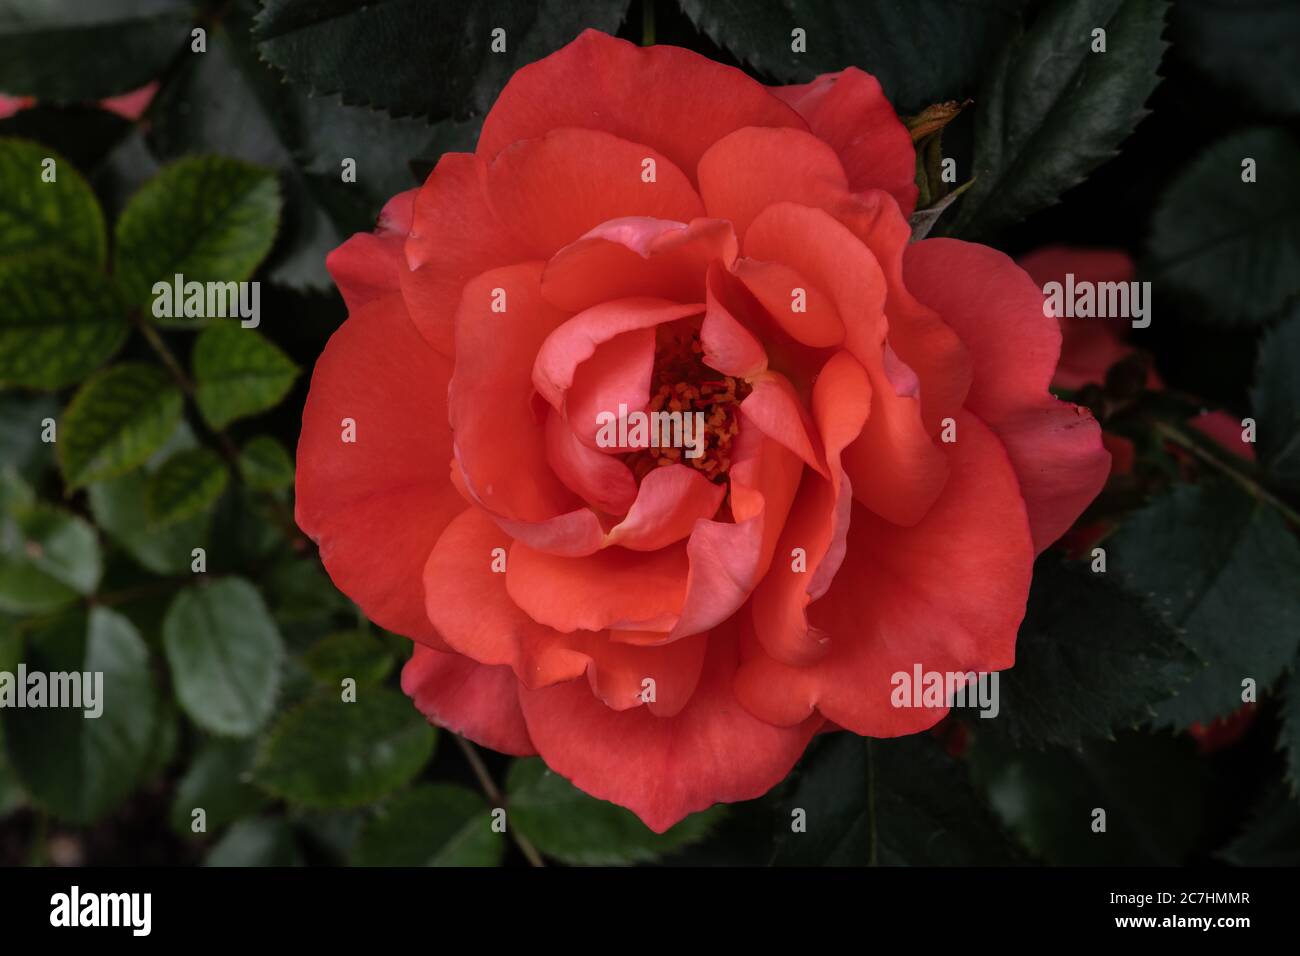 Garden Rose Flower, Variety 'Marmalade Skies' Stock Photo - Alamy